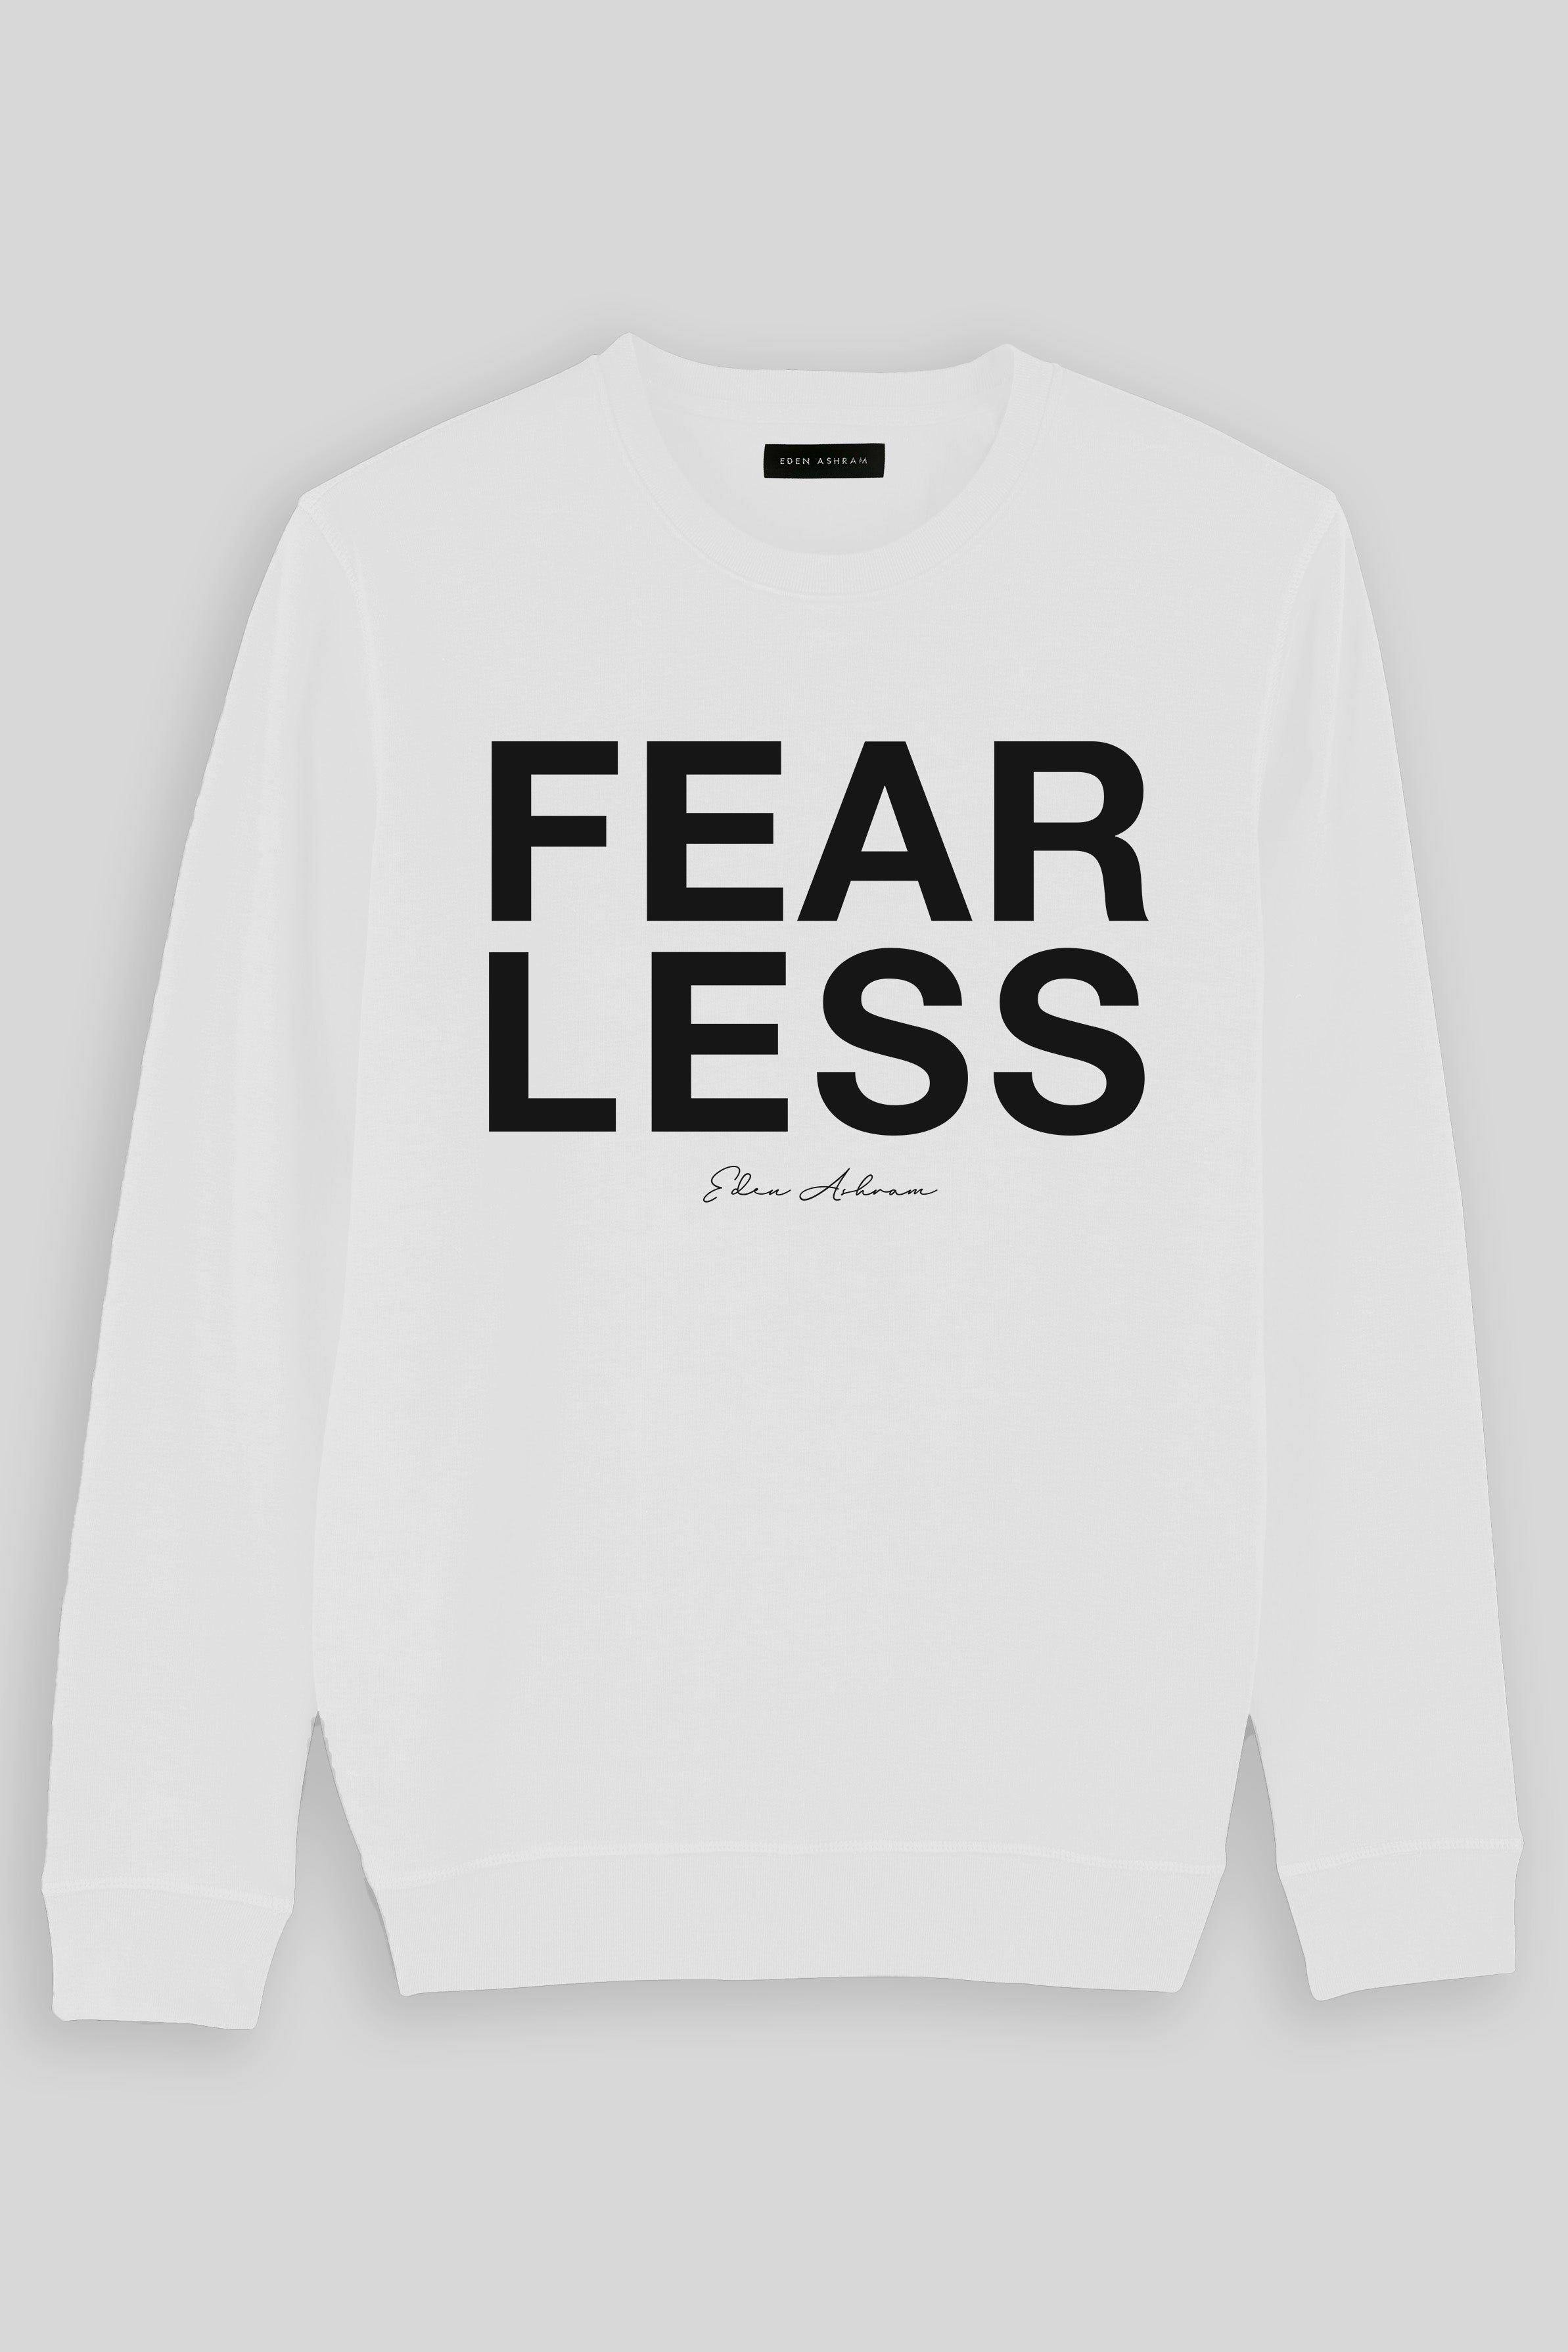 Eden Ashram Fear Less Premium Crew Neck Sweatshirt White